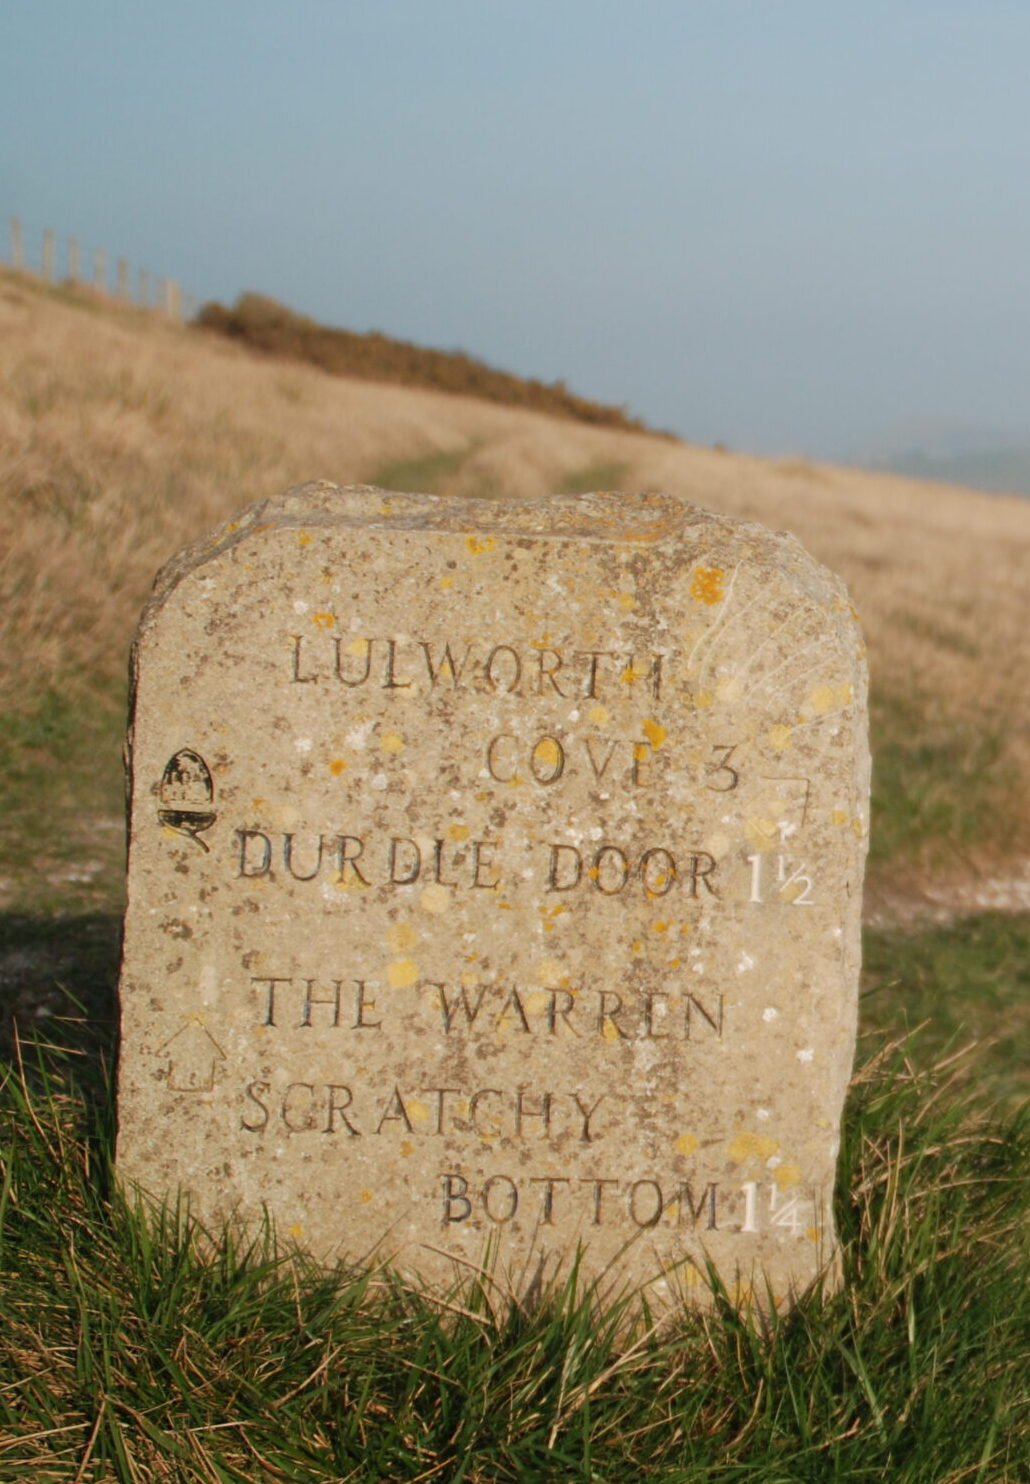 South-West Coast Path Dorset - milestone near Durdle Door (also featuring Scratchy Bottom)